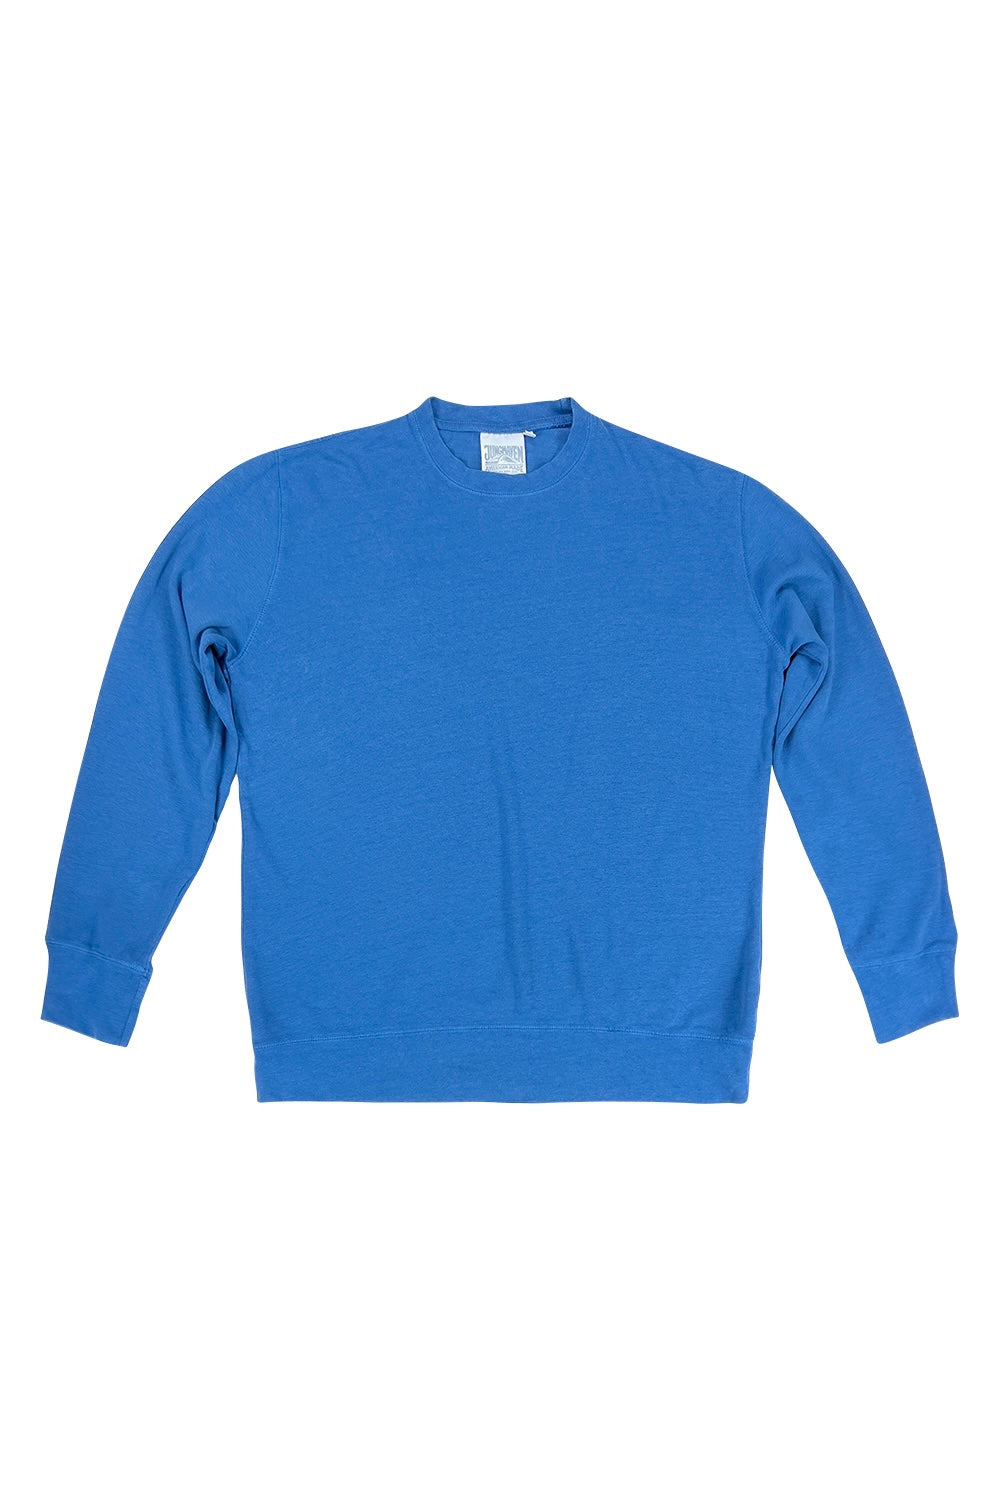 California Pullover - Crewneck Sweatshirt